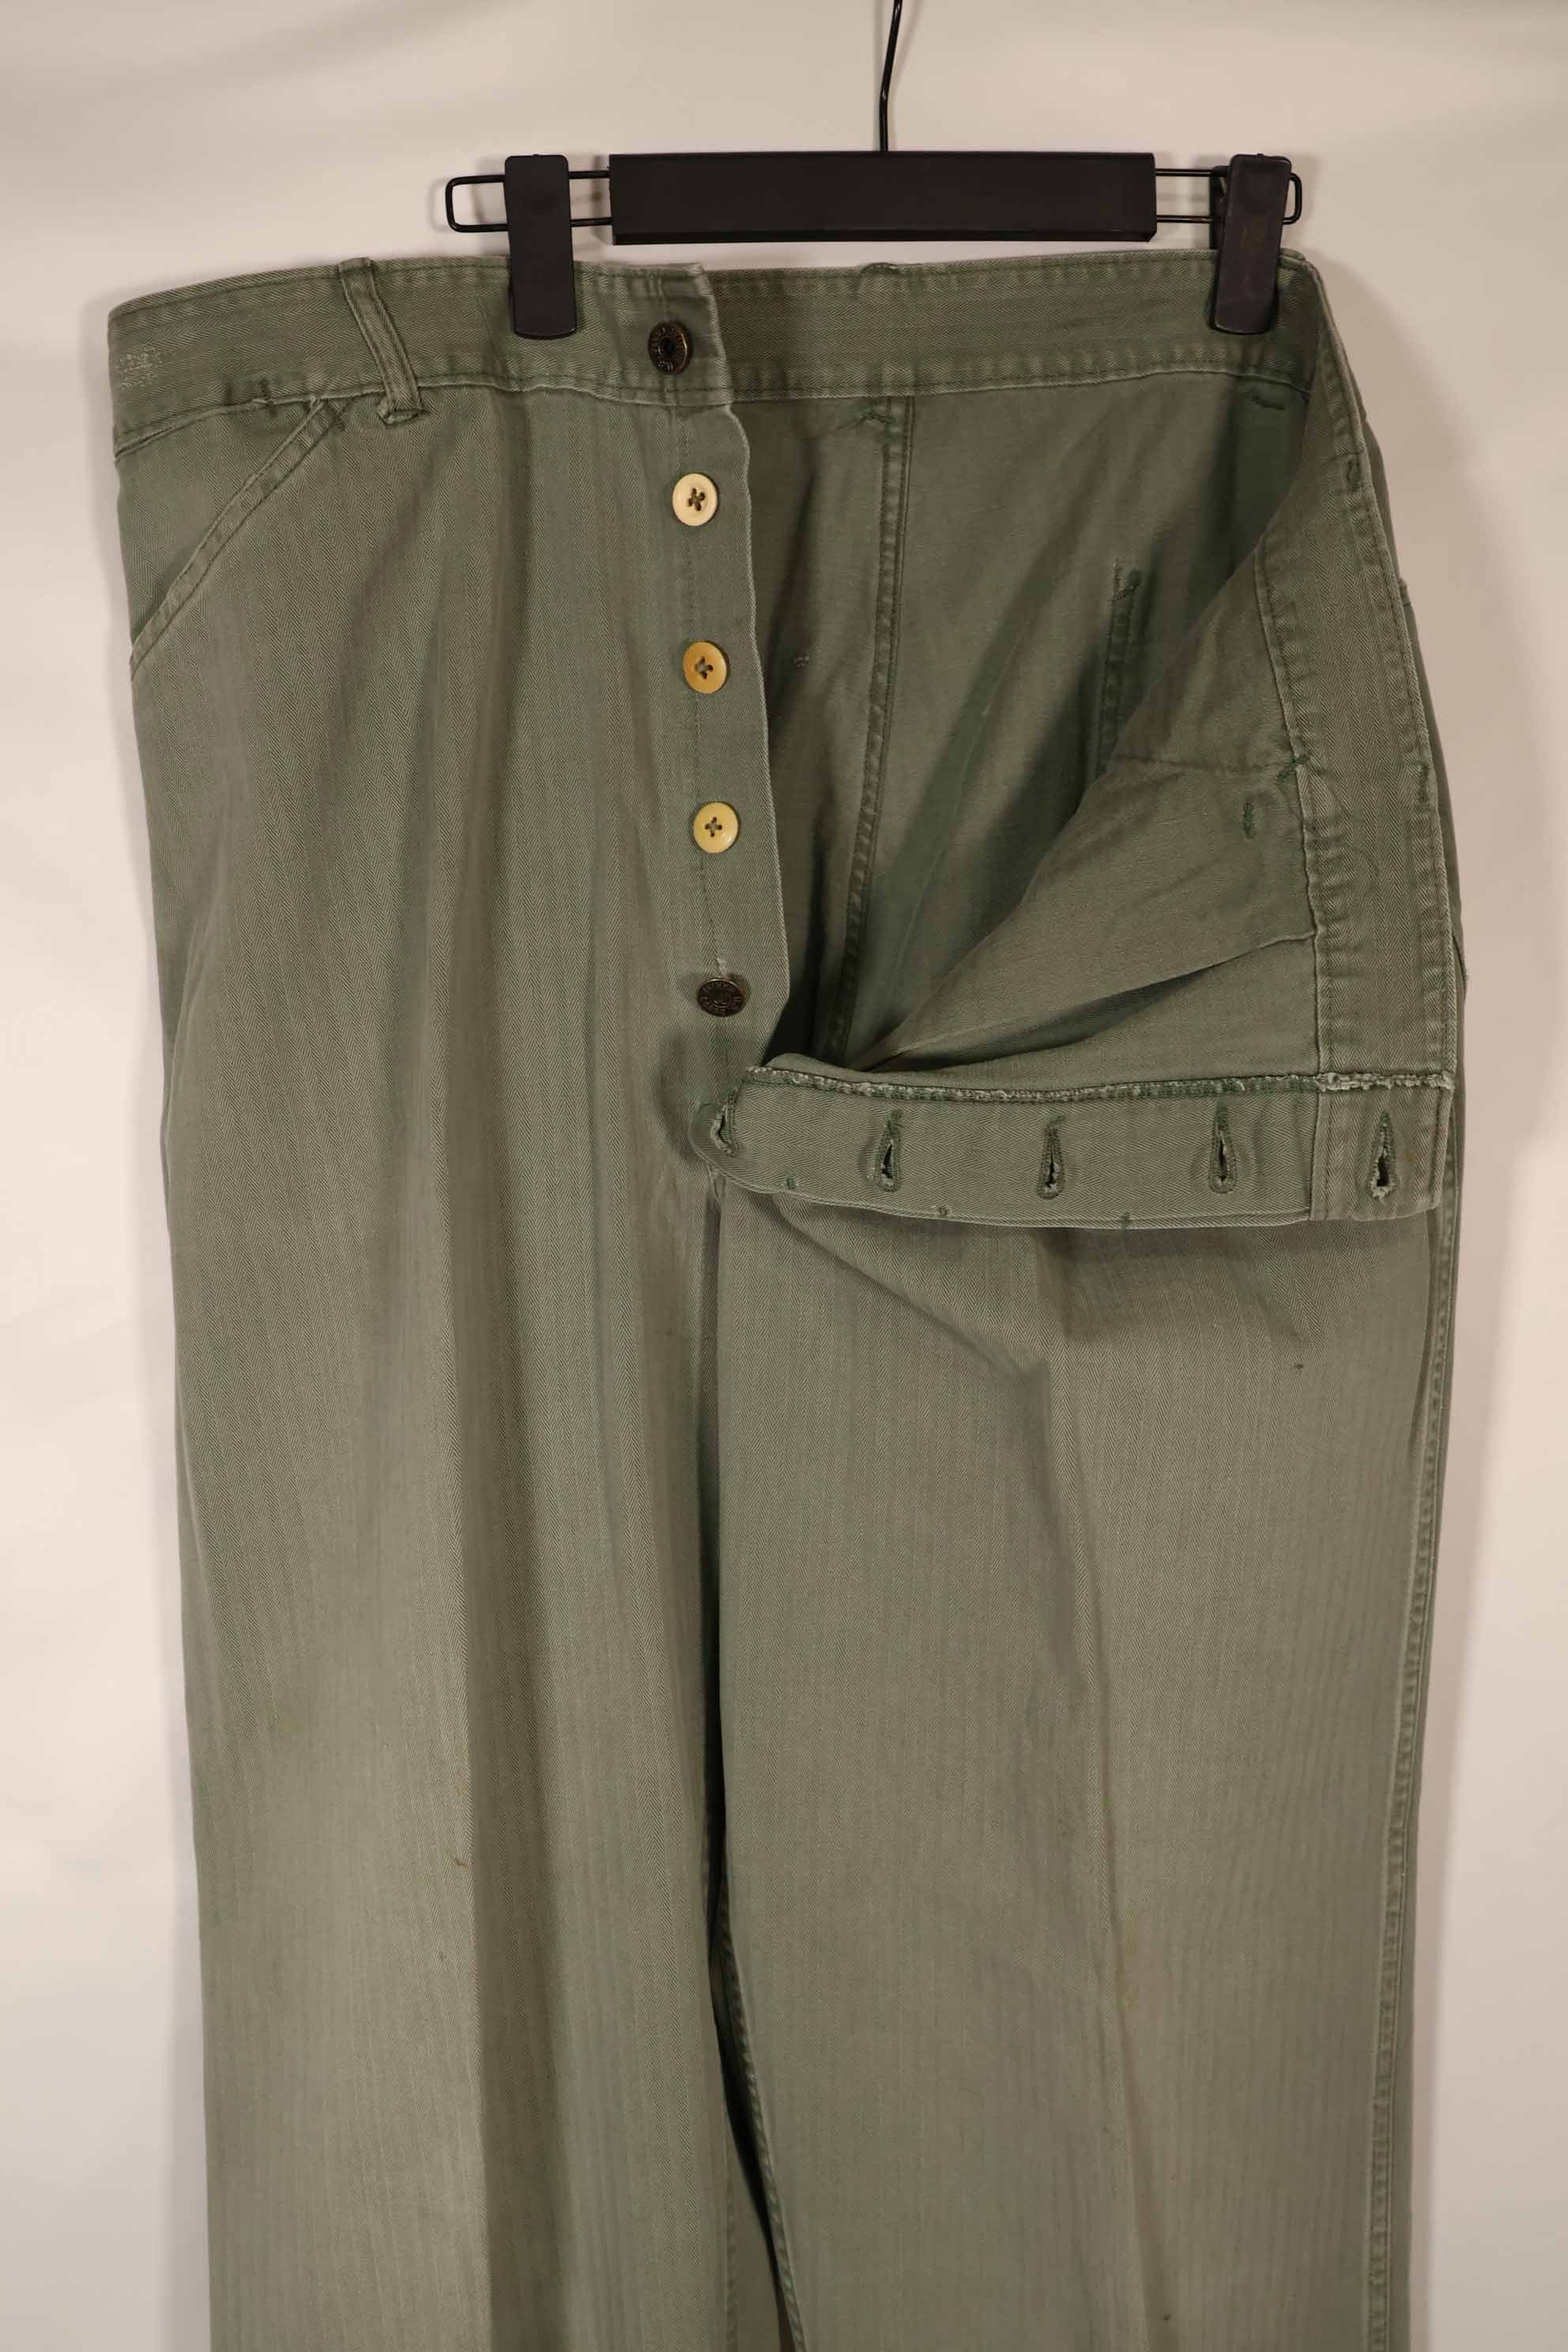 Real 1940s USMC M42 HBT Utility Pants, large size, used.